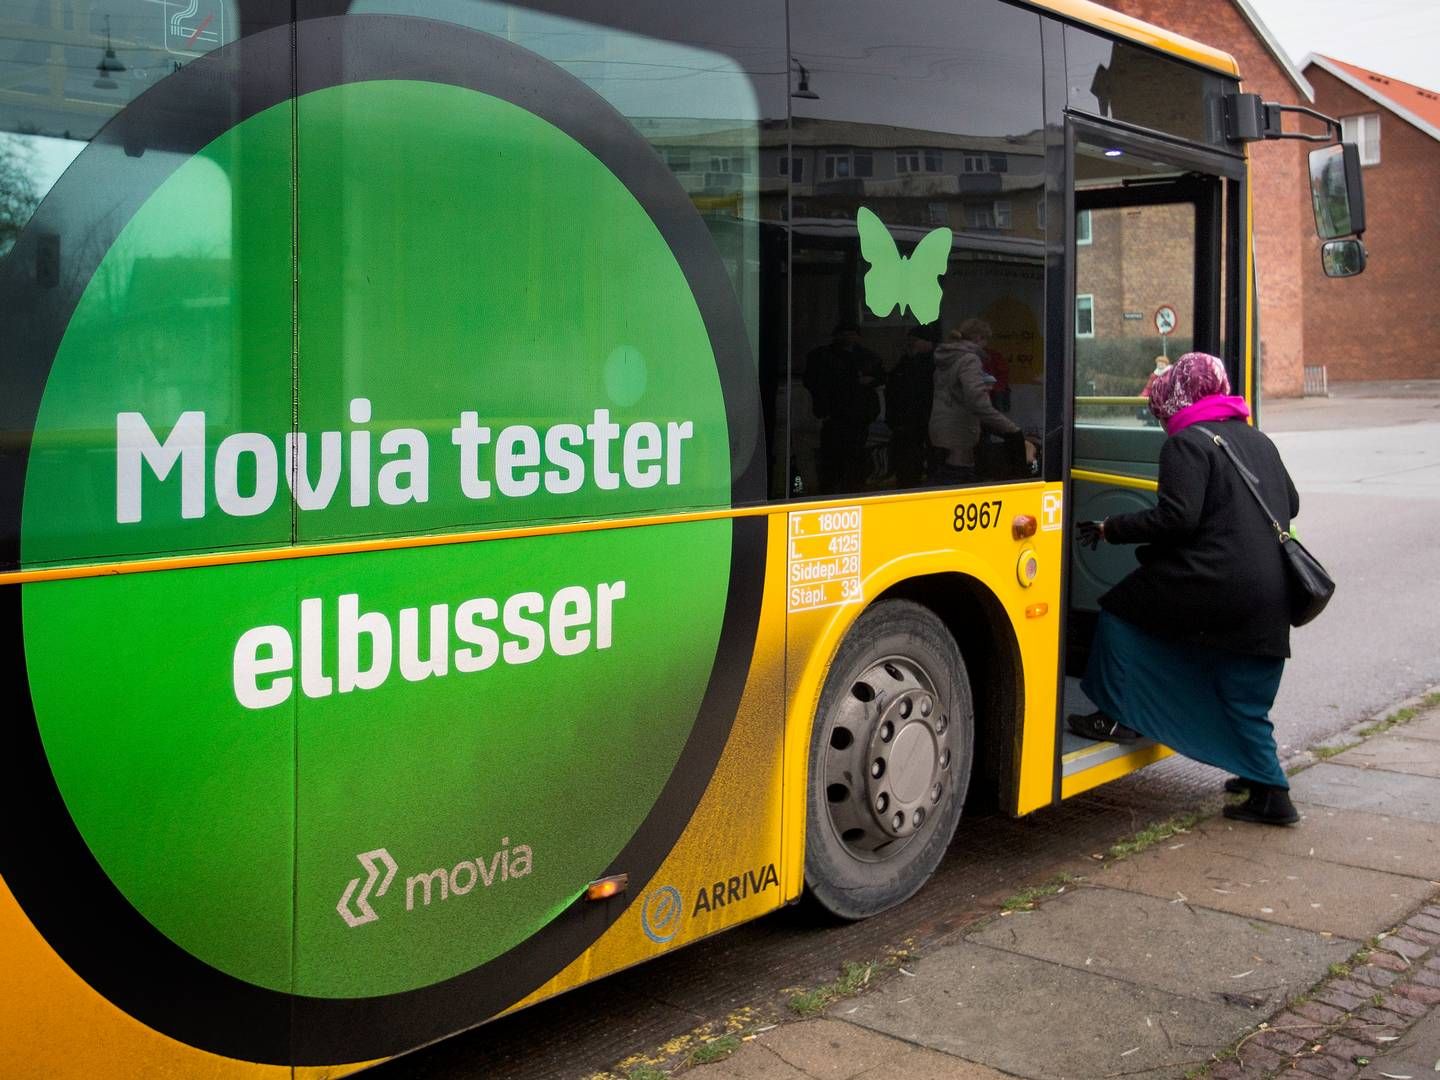 Movia har flest elbusser i flåden. | Foto: Finn Frandsen/Politiken/Ritzau Scanpix